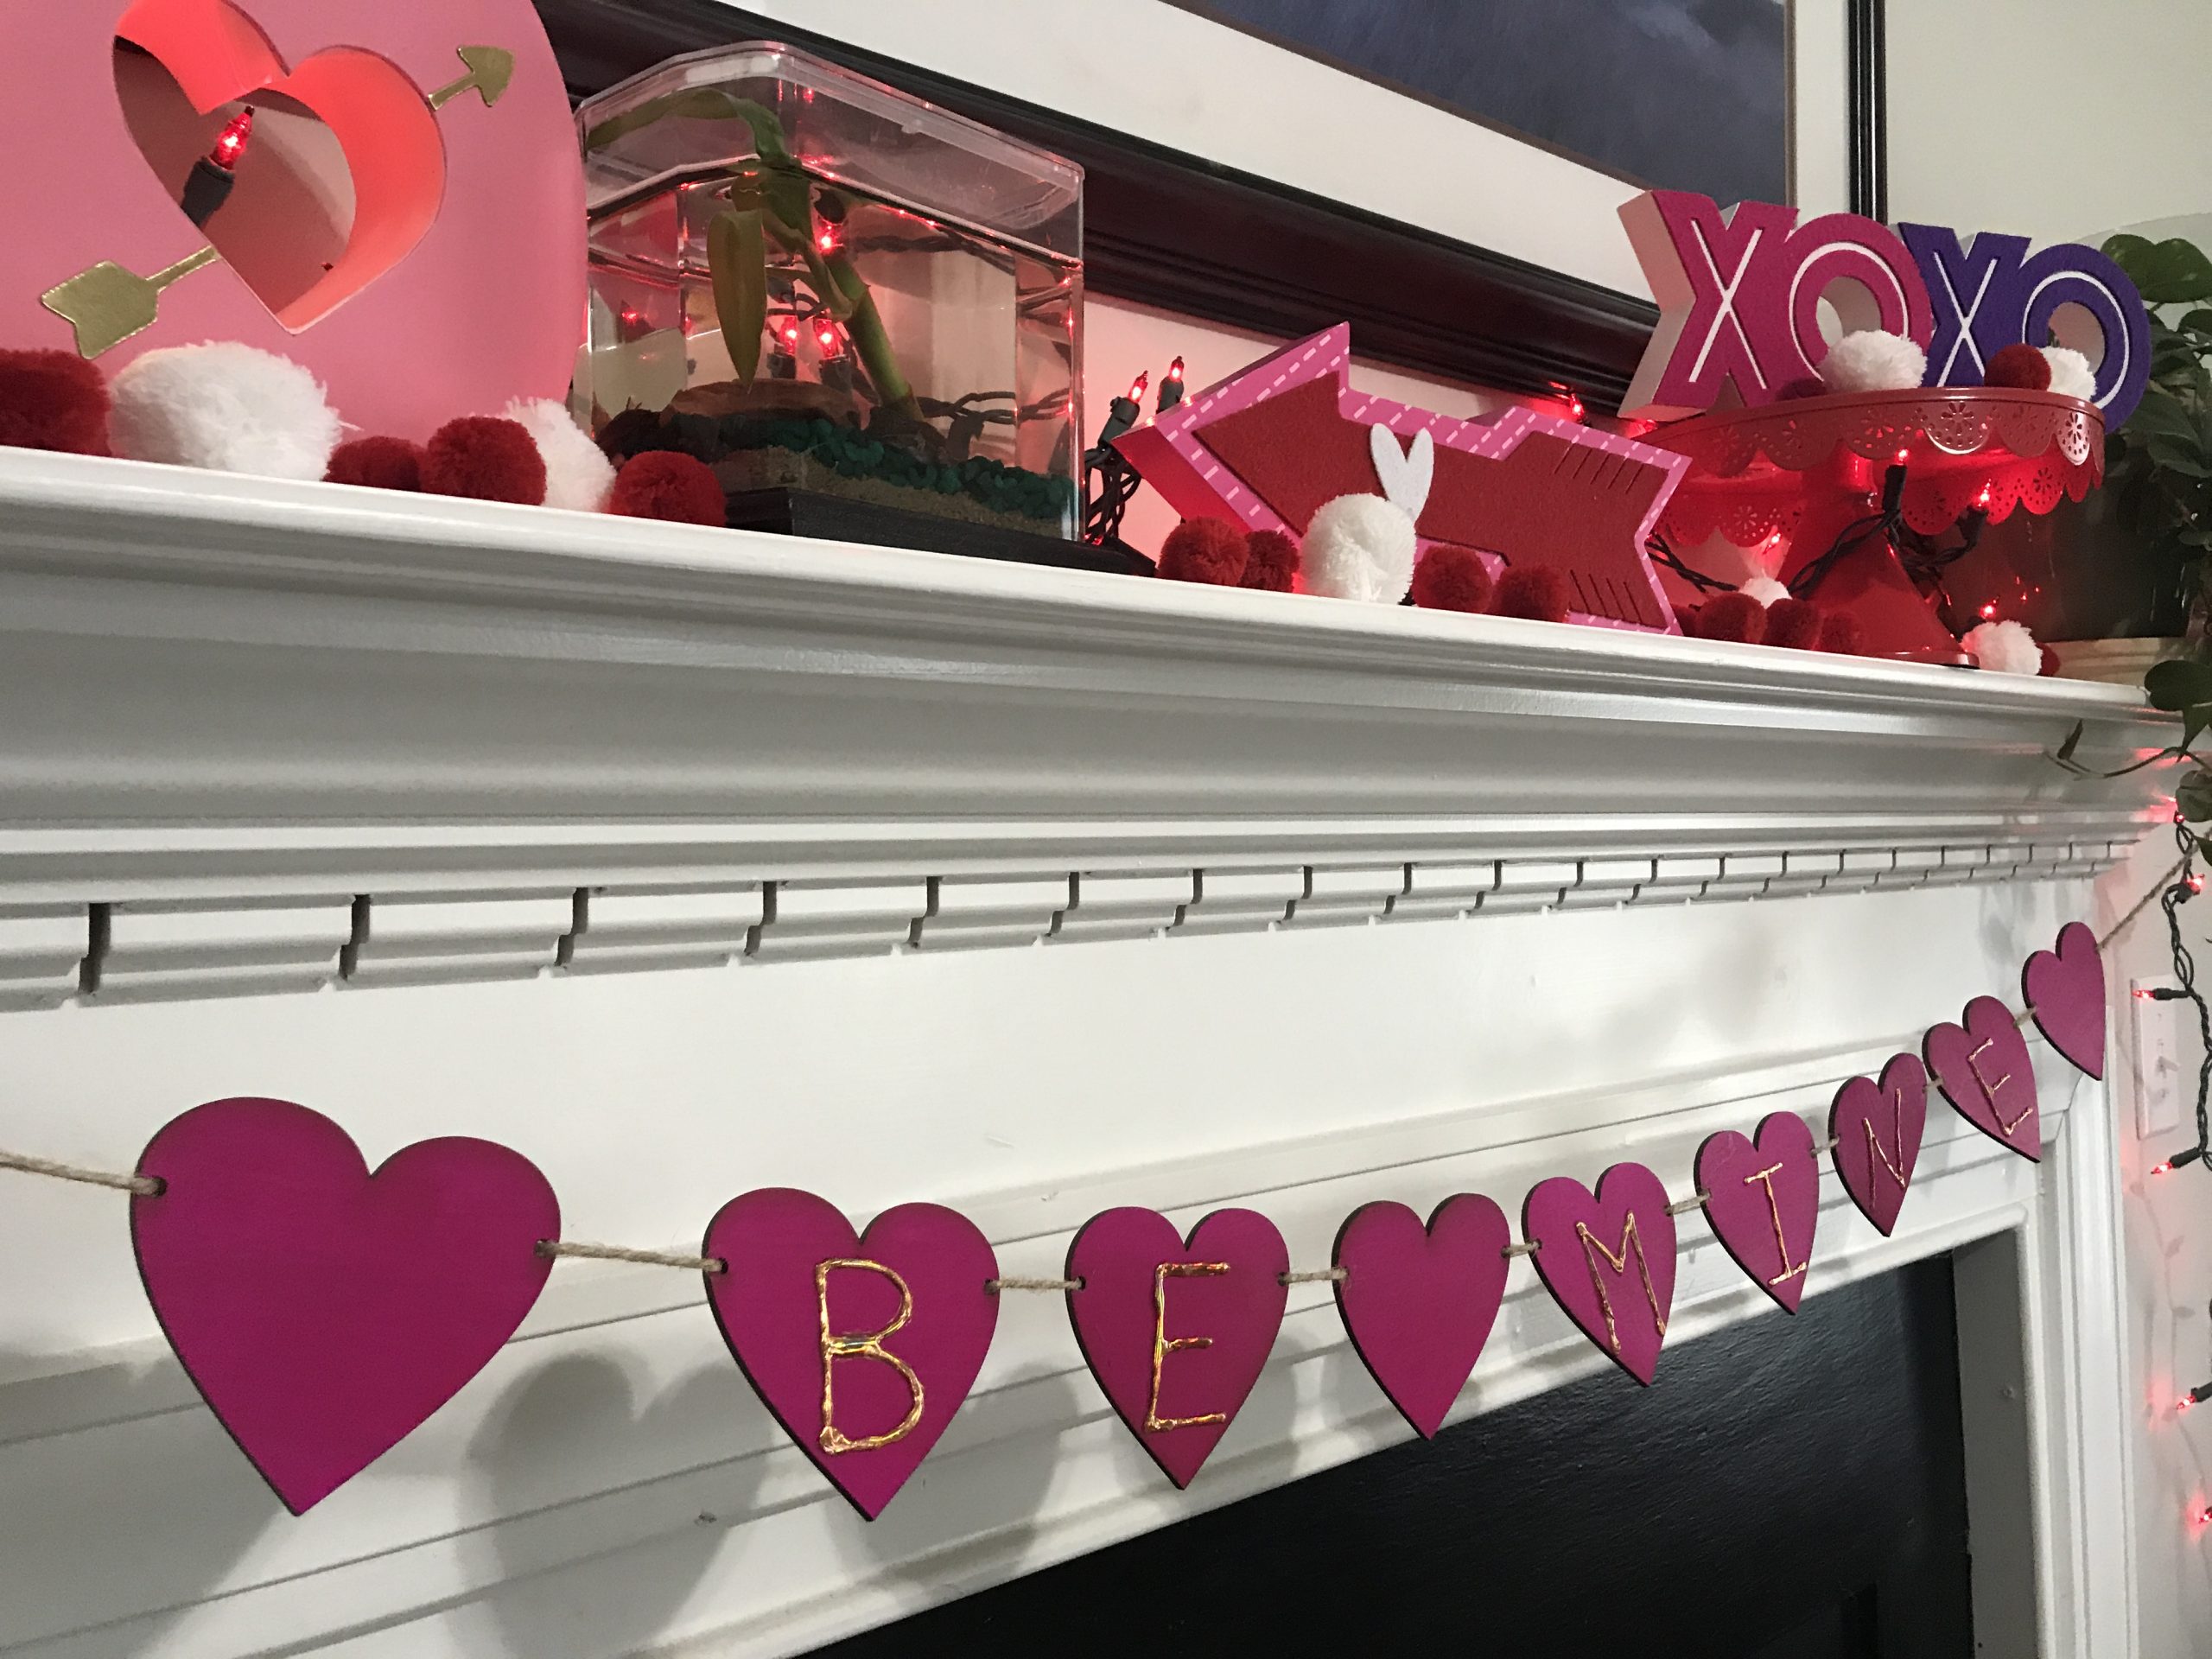 15 Fun Easy Felt Valentine Crafts - Kunin Felt